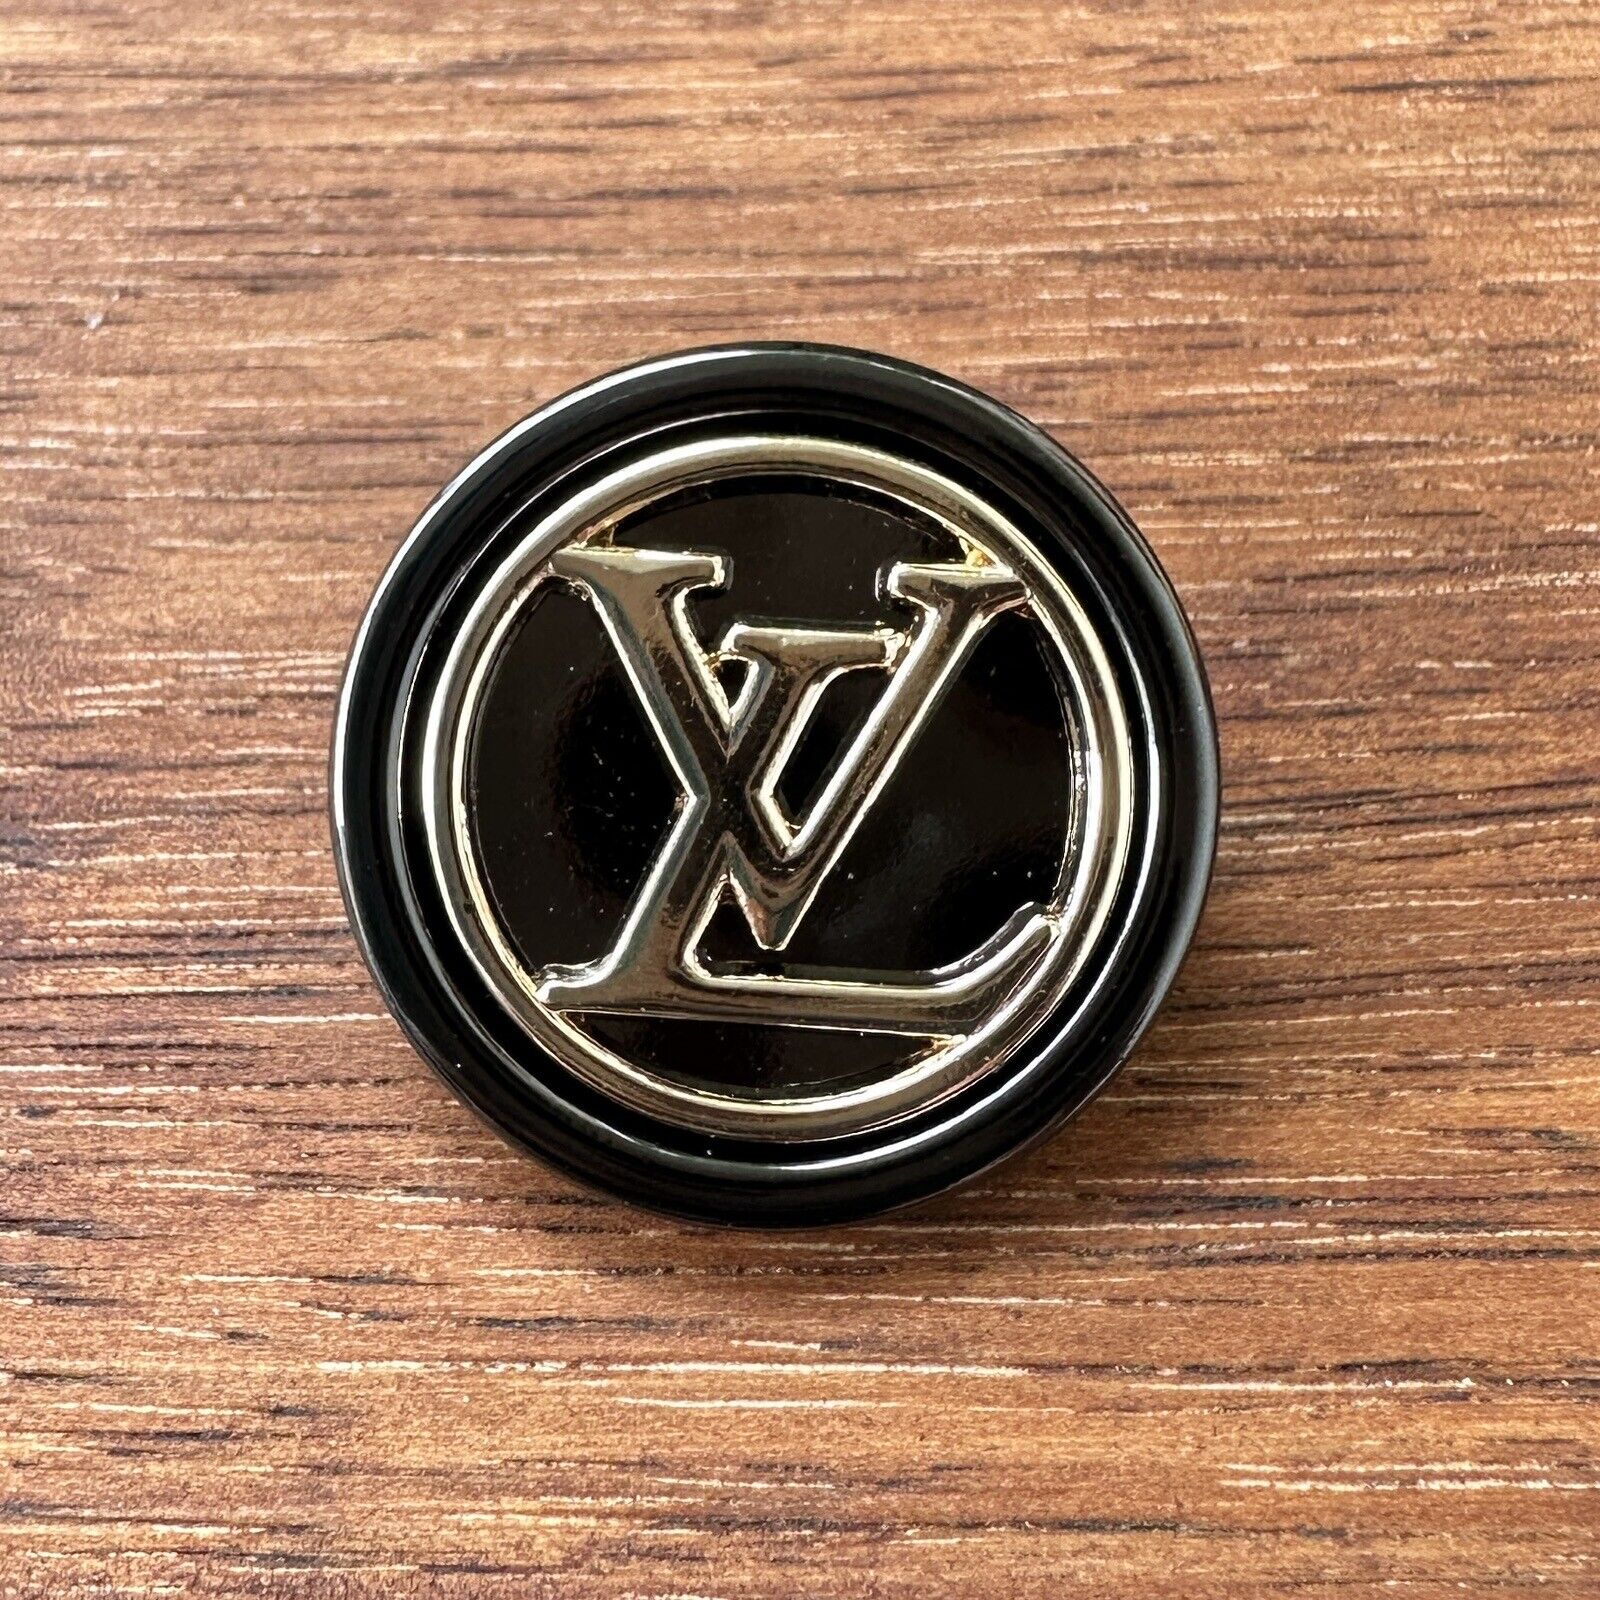 1 Louis Vuitton Shank Button, 22mm, Black & Gold Designer Button